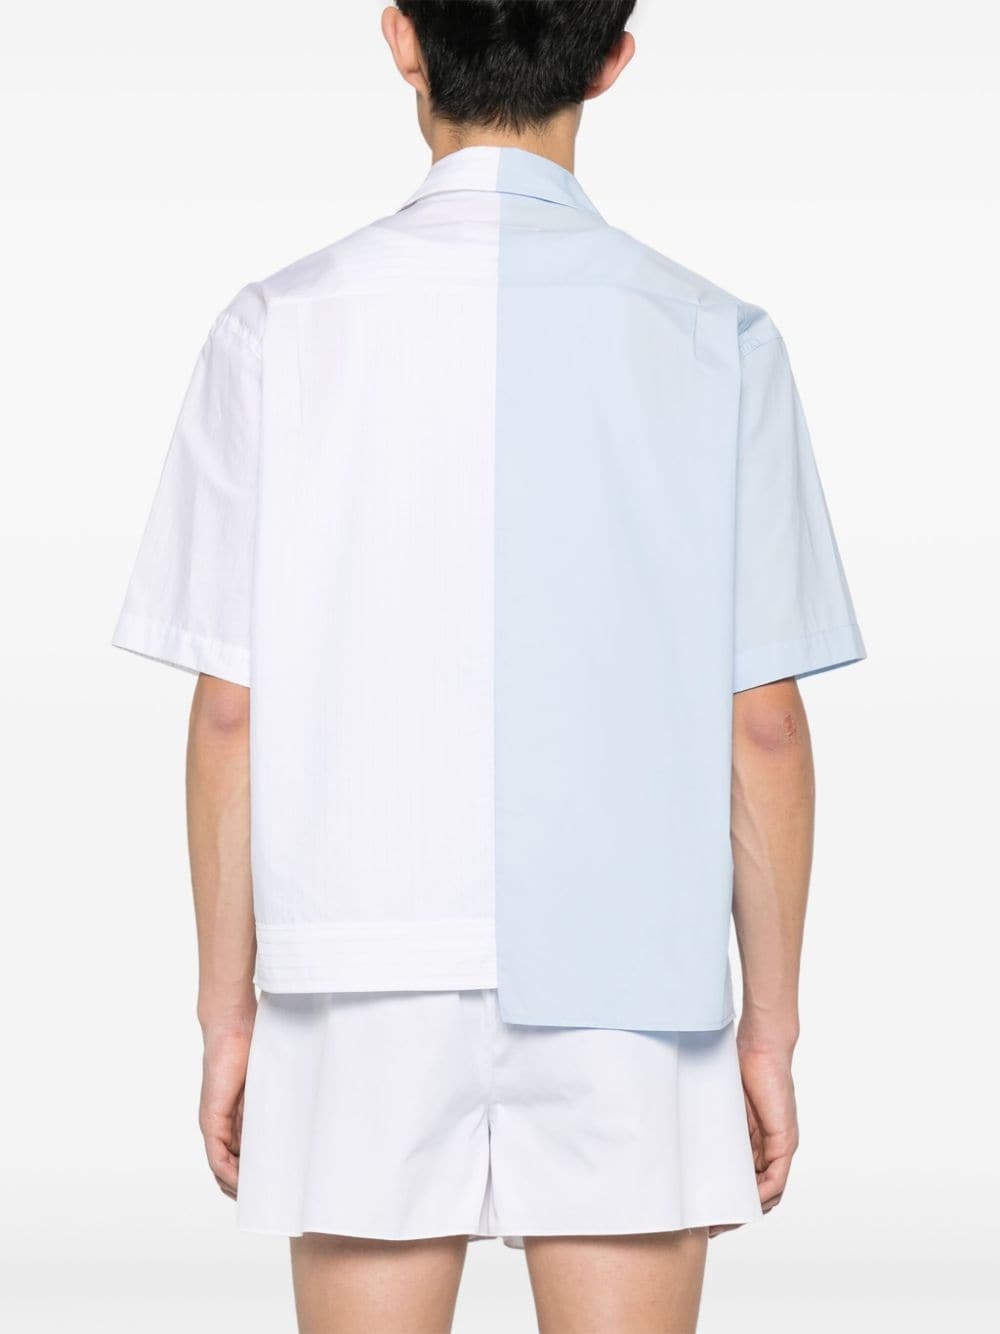 panelled-design cotton shirt - 4